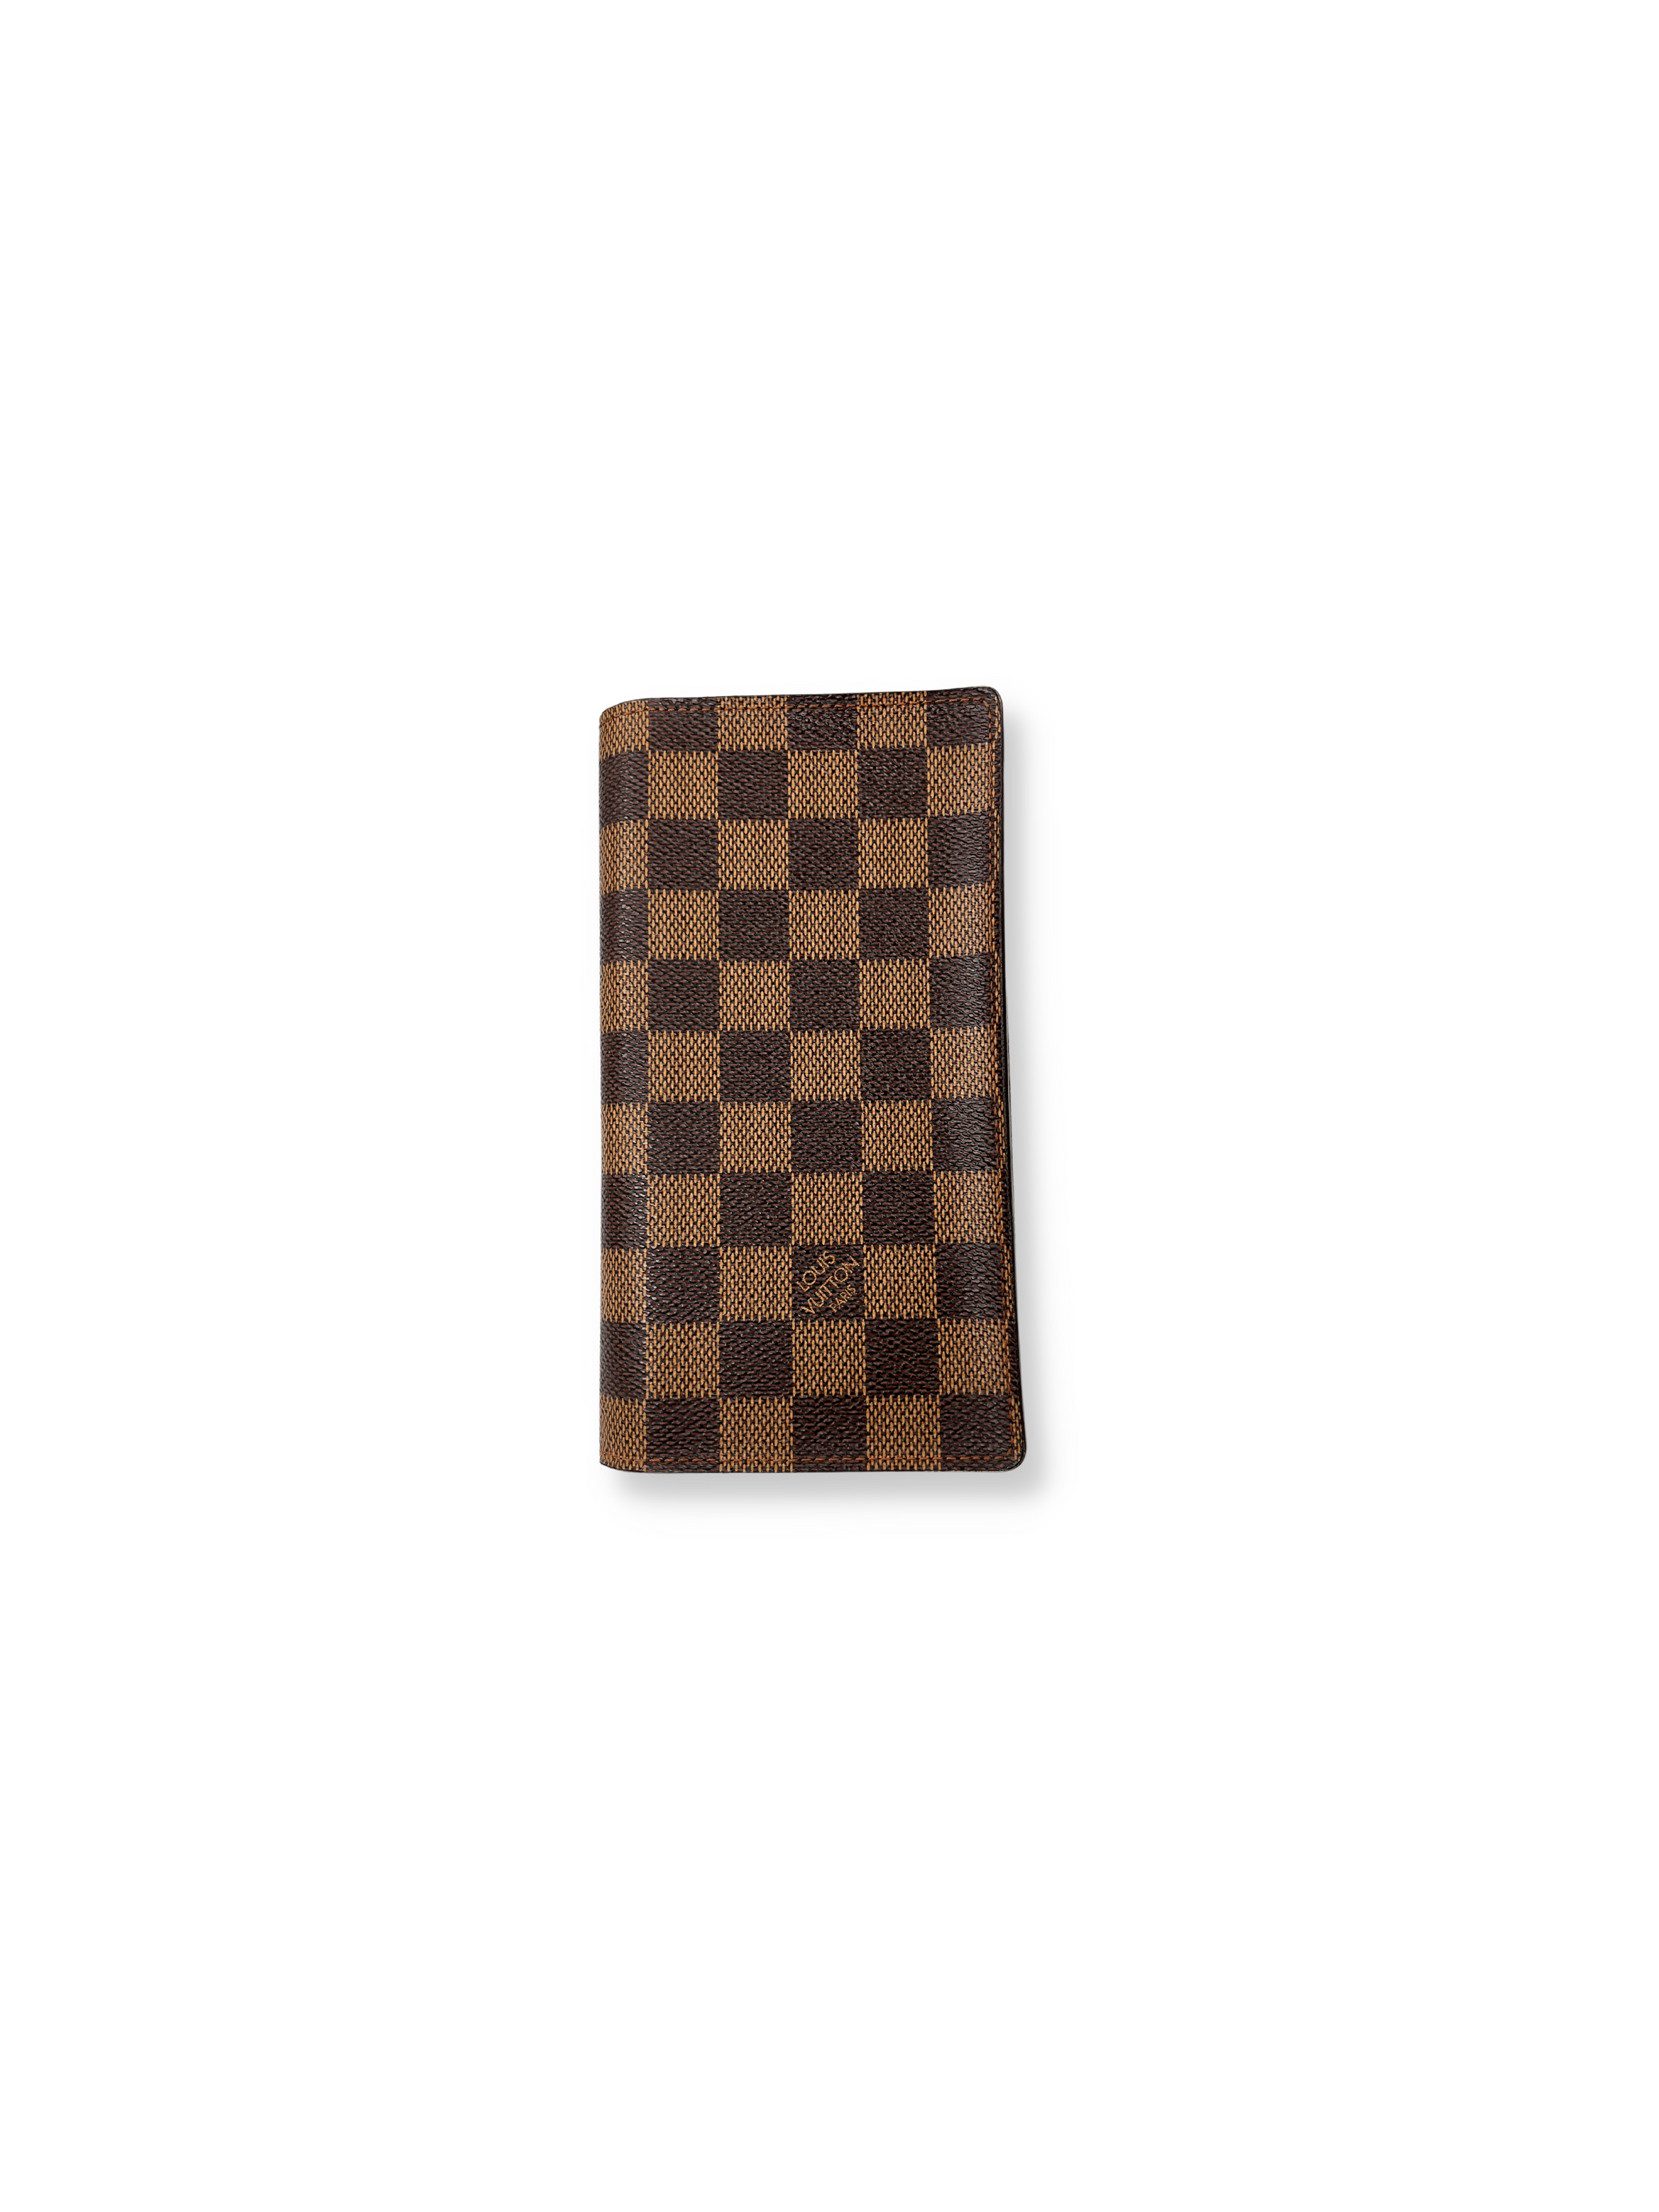 Authentic Louis Vuitton Damier Ebene Canvas Checkbook Holder